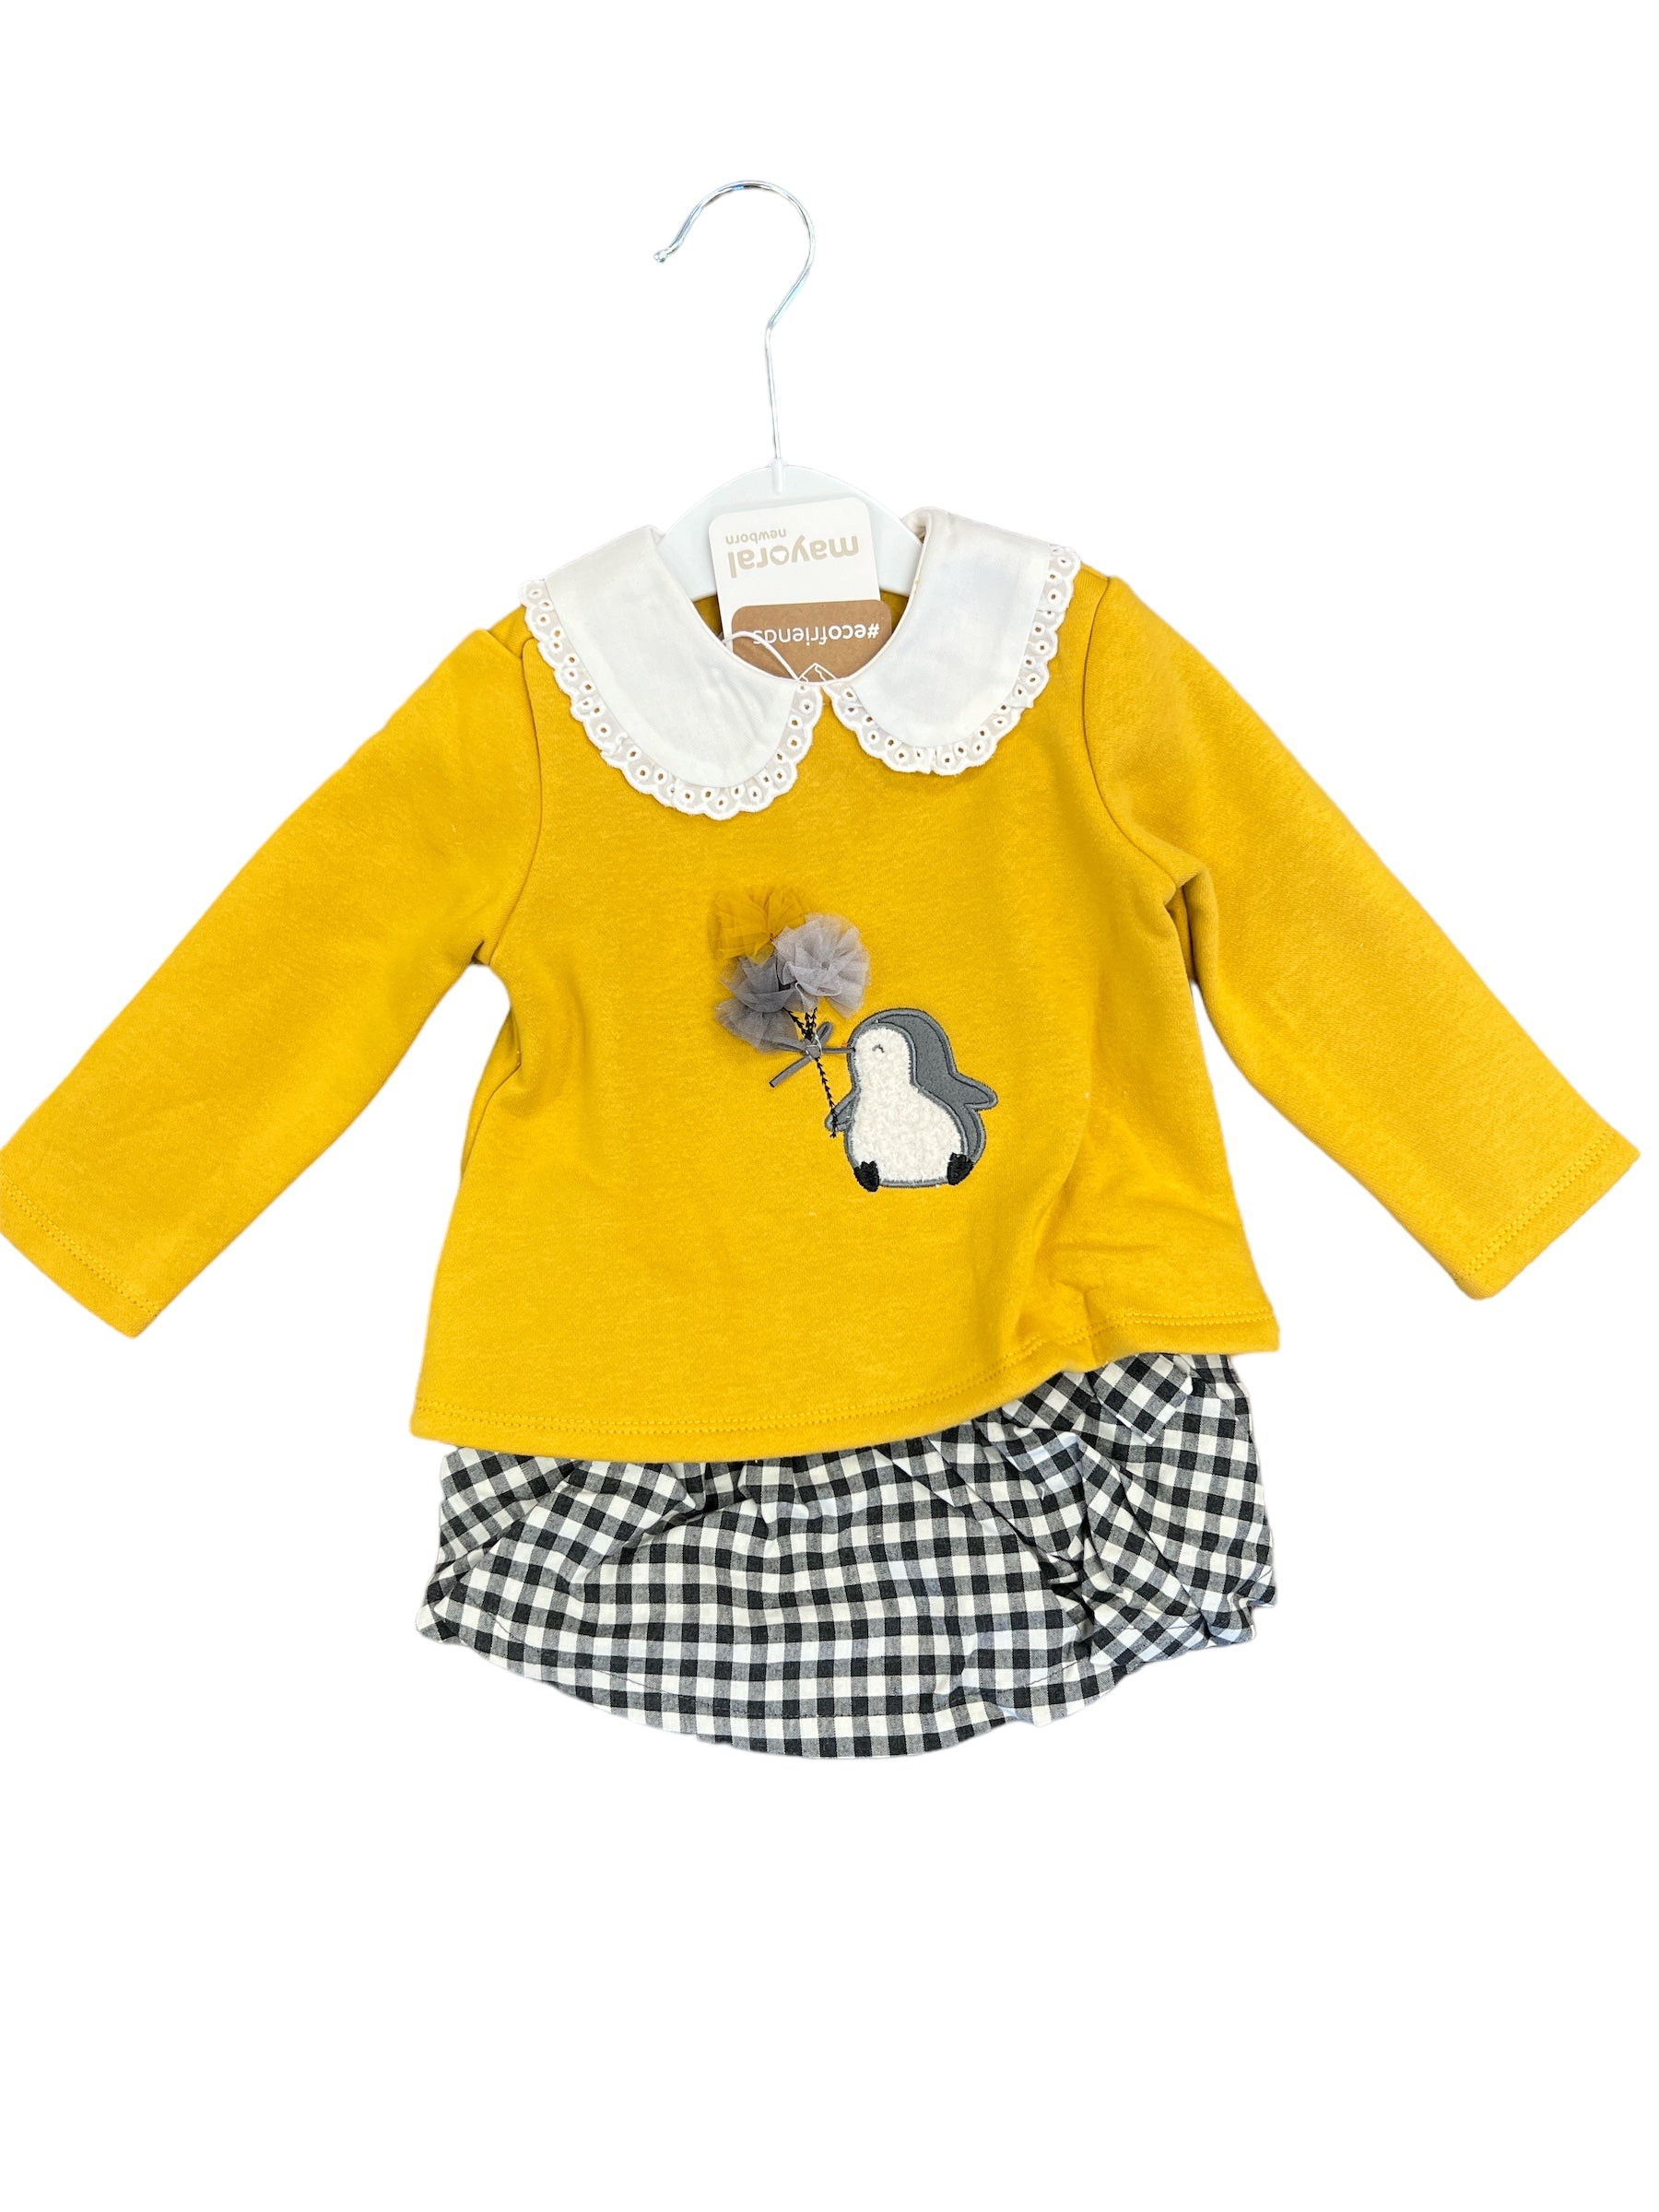 Penguin Skirt Set-520 Baby & Kids Gifts-Simply Stylish Boutique-Simply Stylish Boutique | Women’s & Kid’s Fashion | Paducah, KY